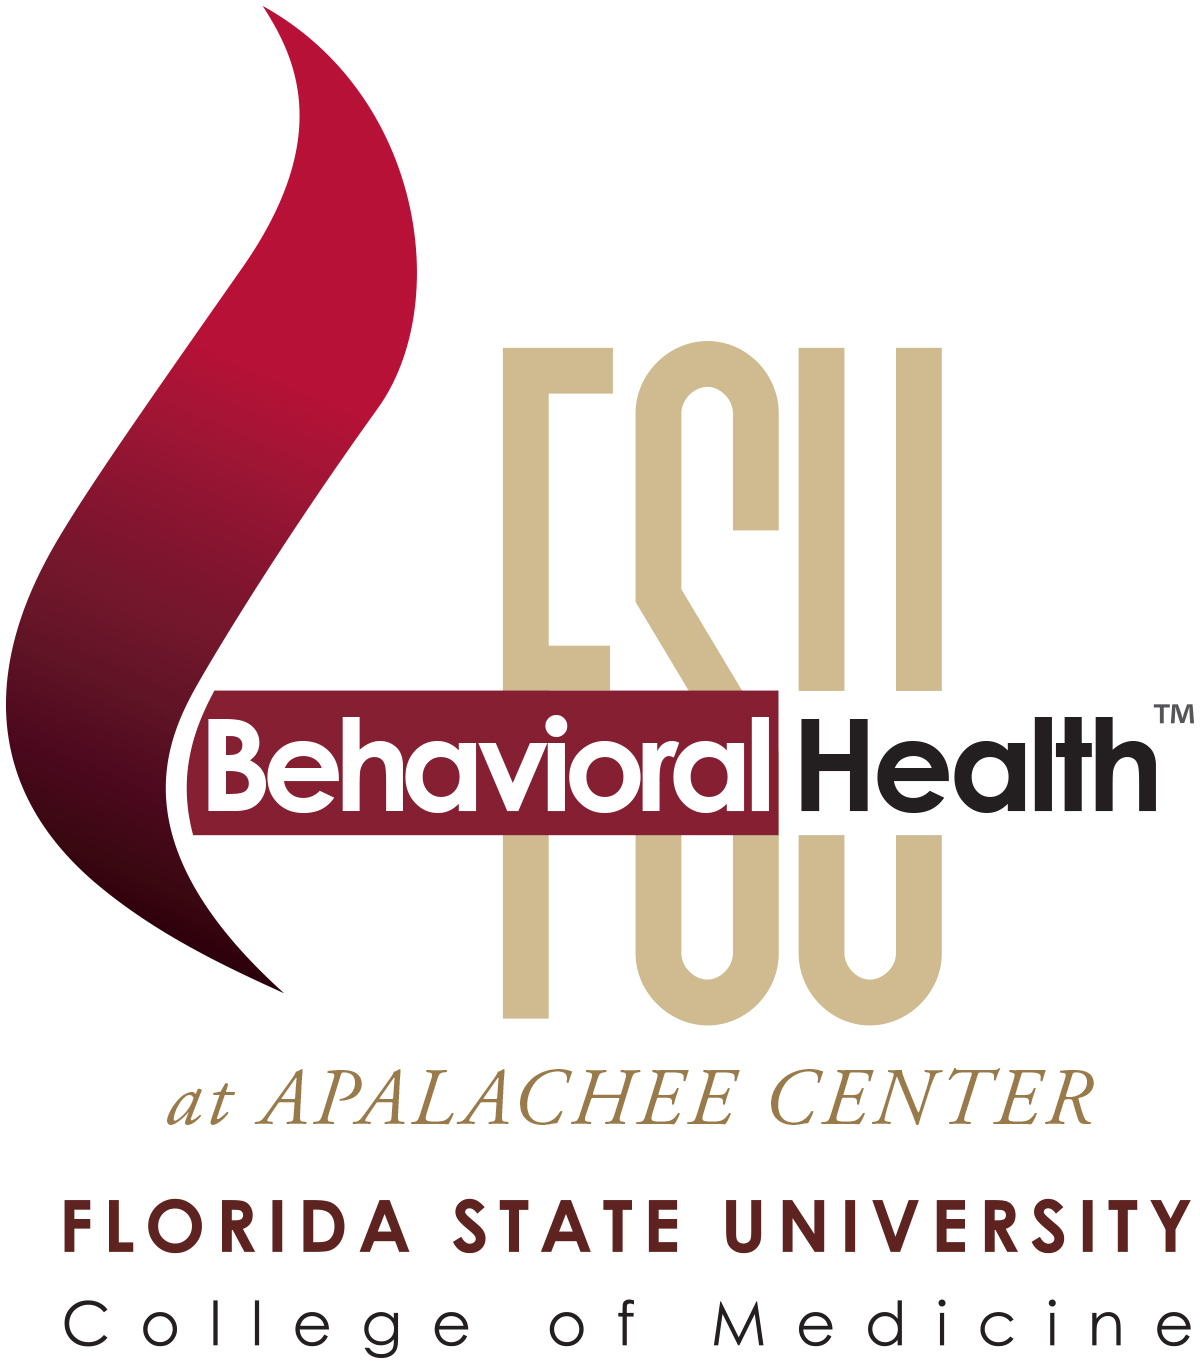 BehavioralHealth at Apalachee Center